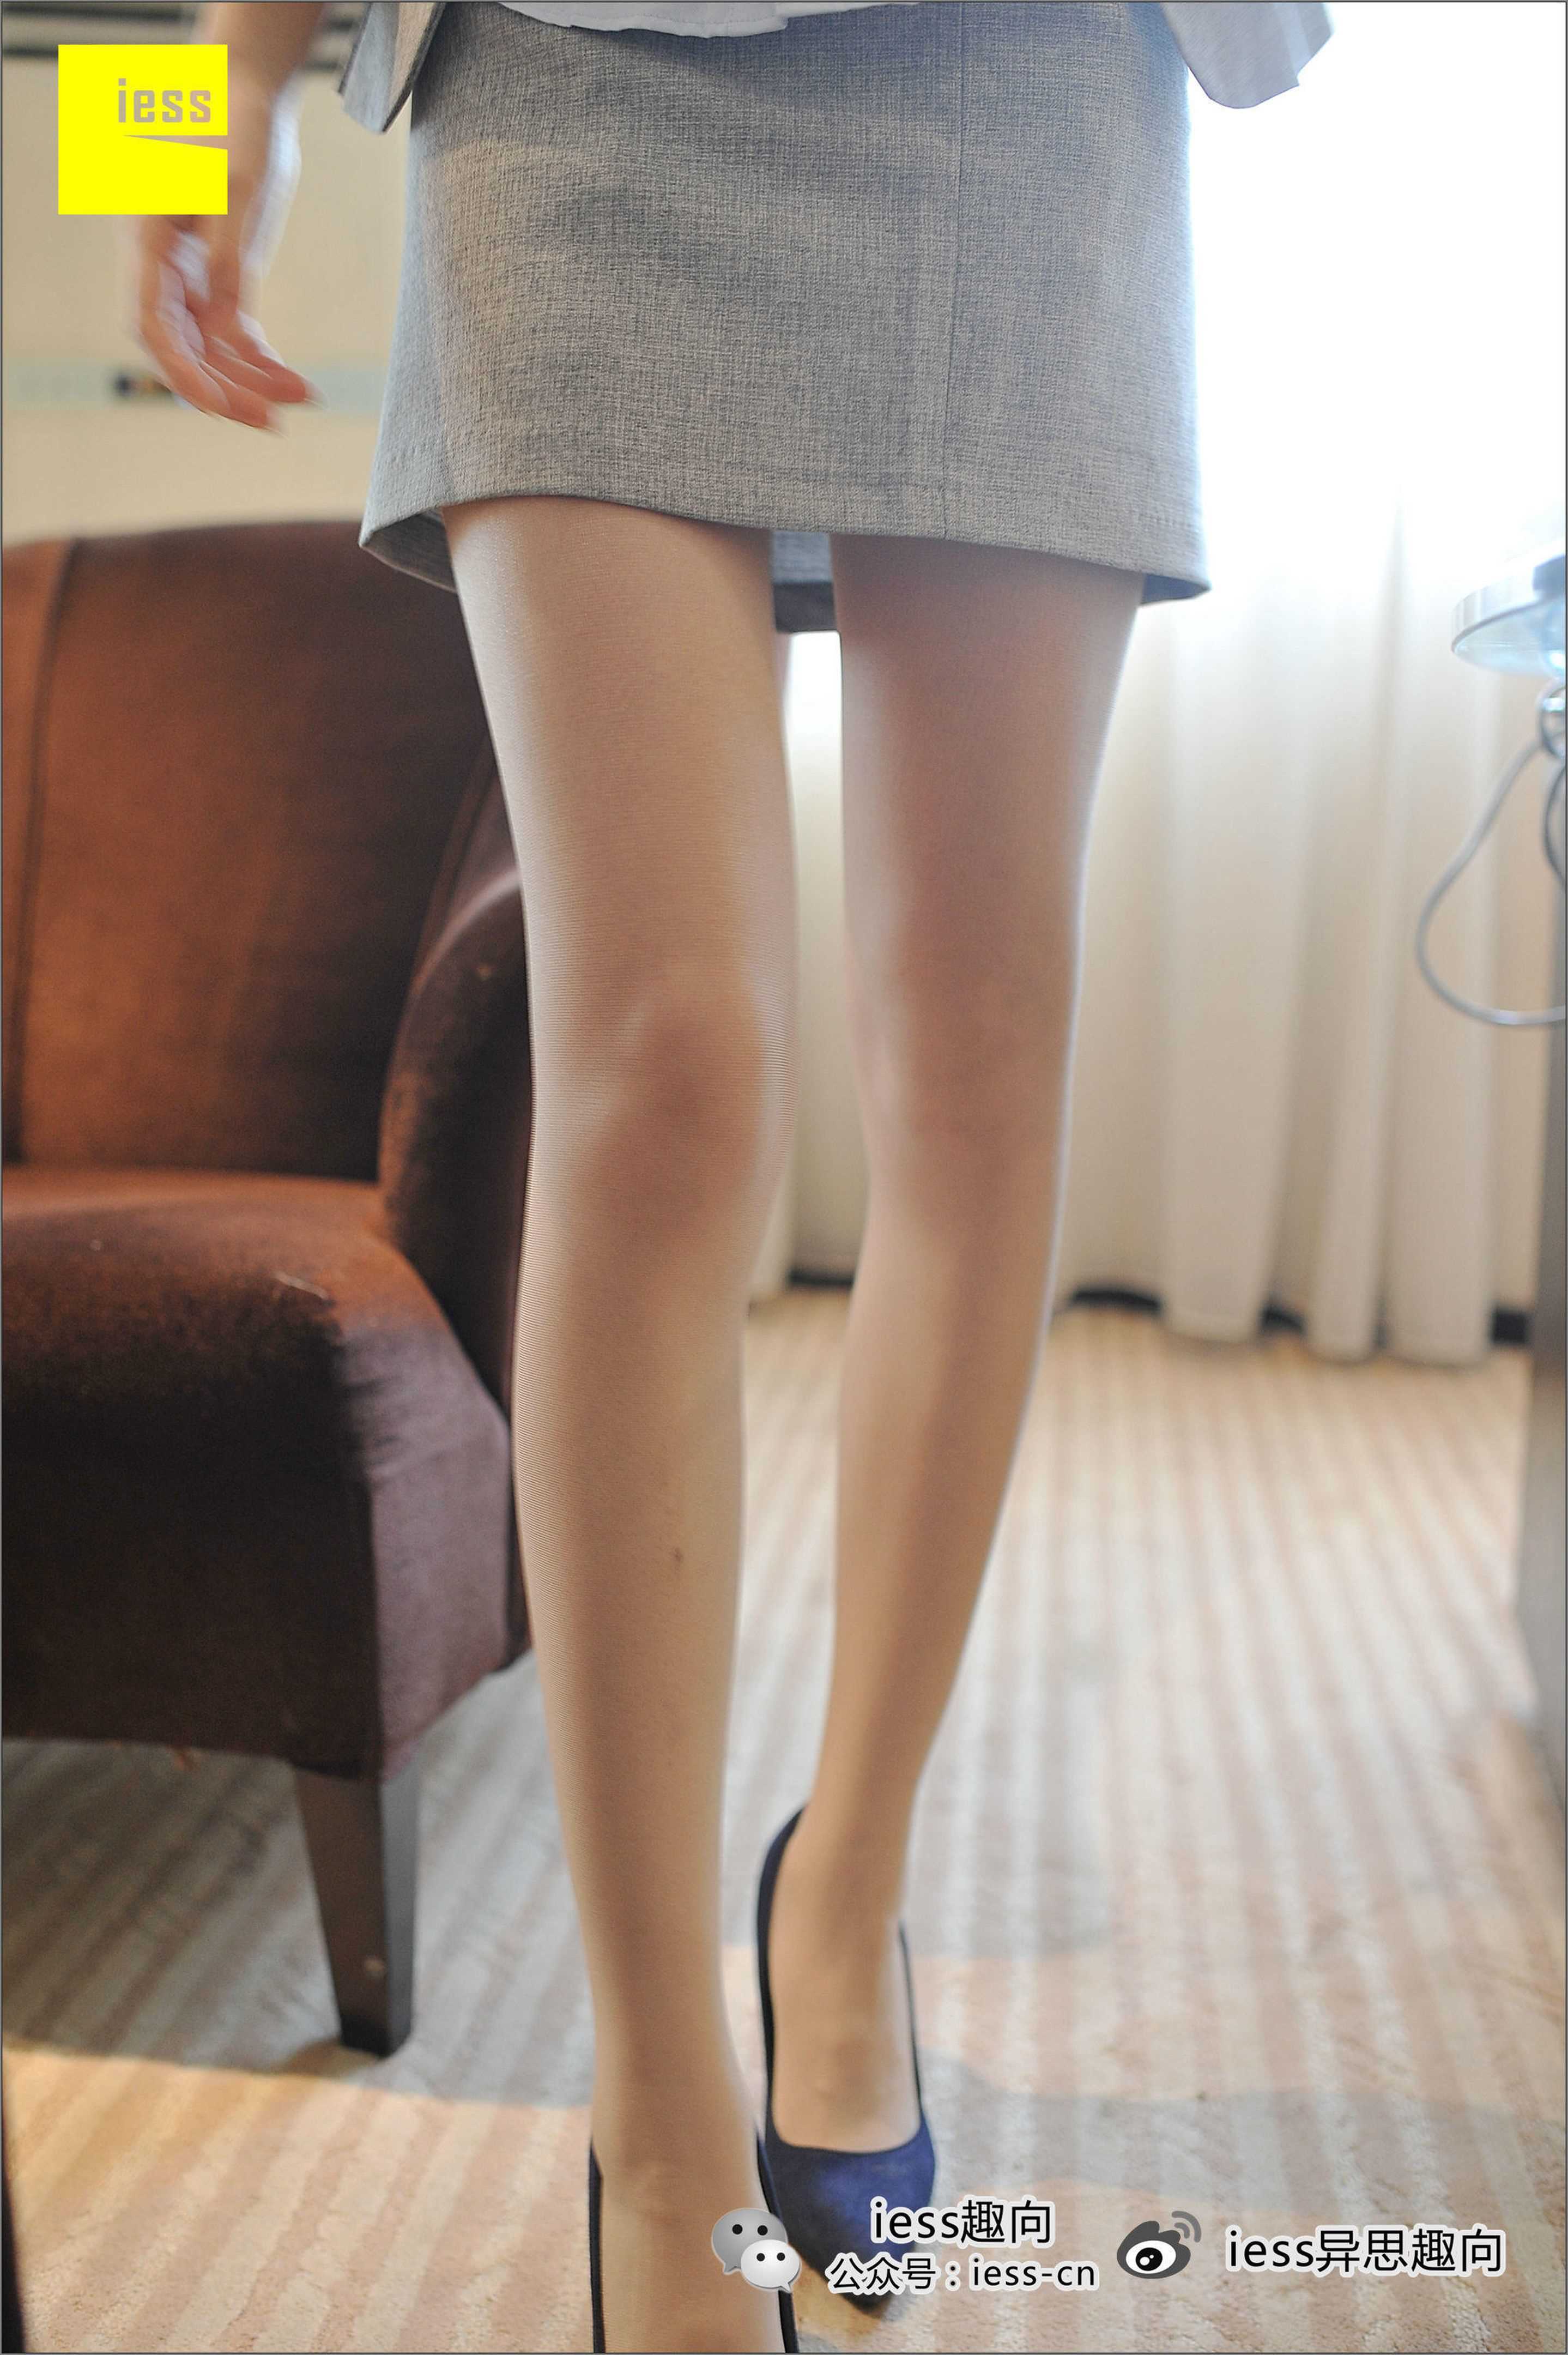 China Beauty Legs and feet 120